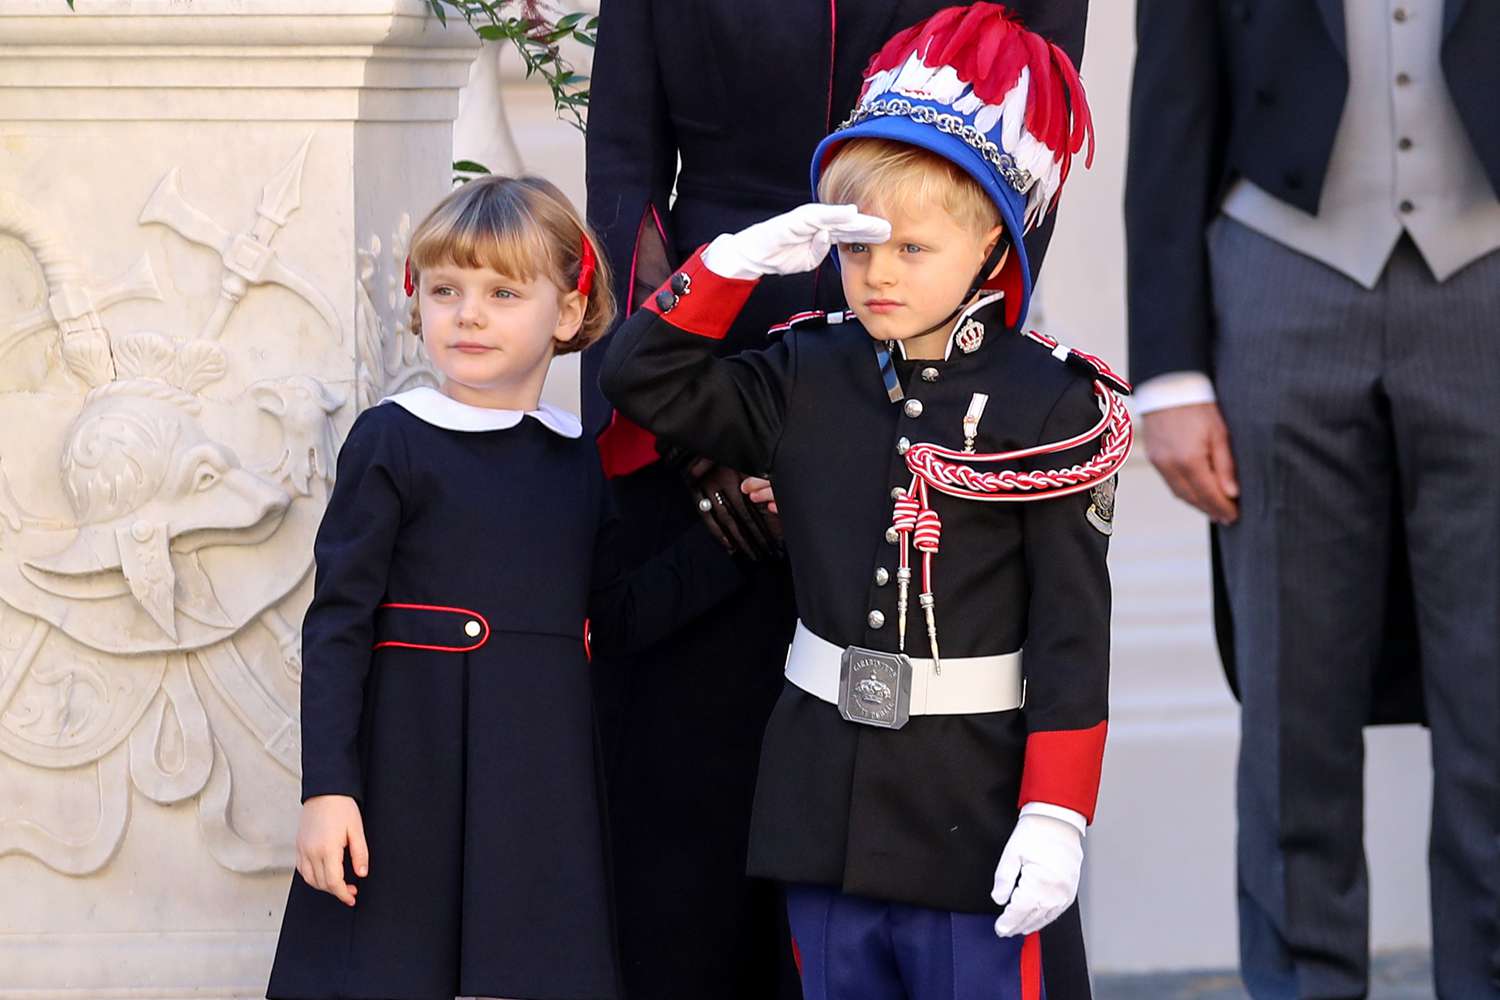 Prince Jacques of Monaco salutes next to Princess Gabriella of Monaco